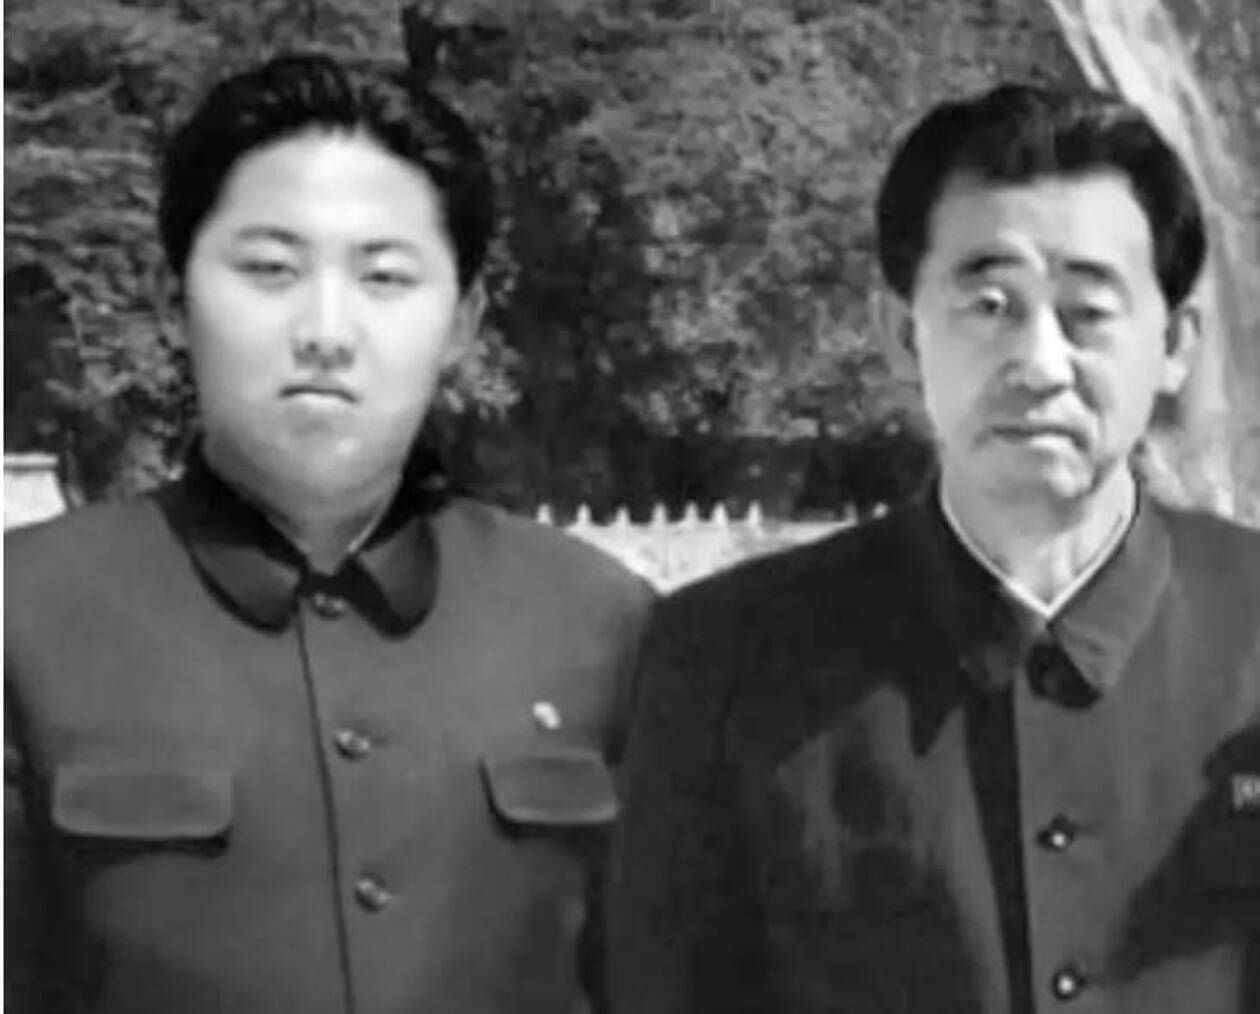 Bόρεια Κορέα: Σπάνιες φωτογραφίες από τον έφηβο Κιμ Γιονγκ Ουν